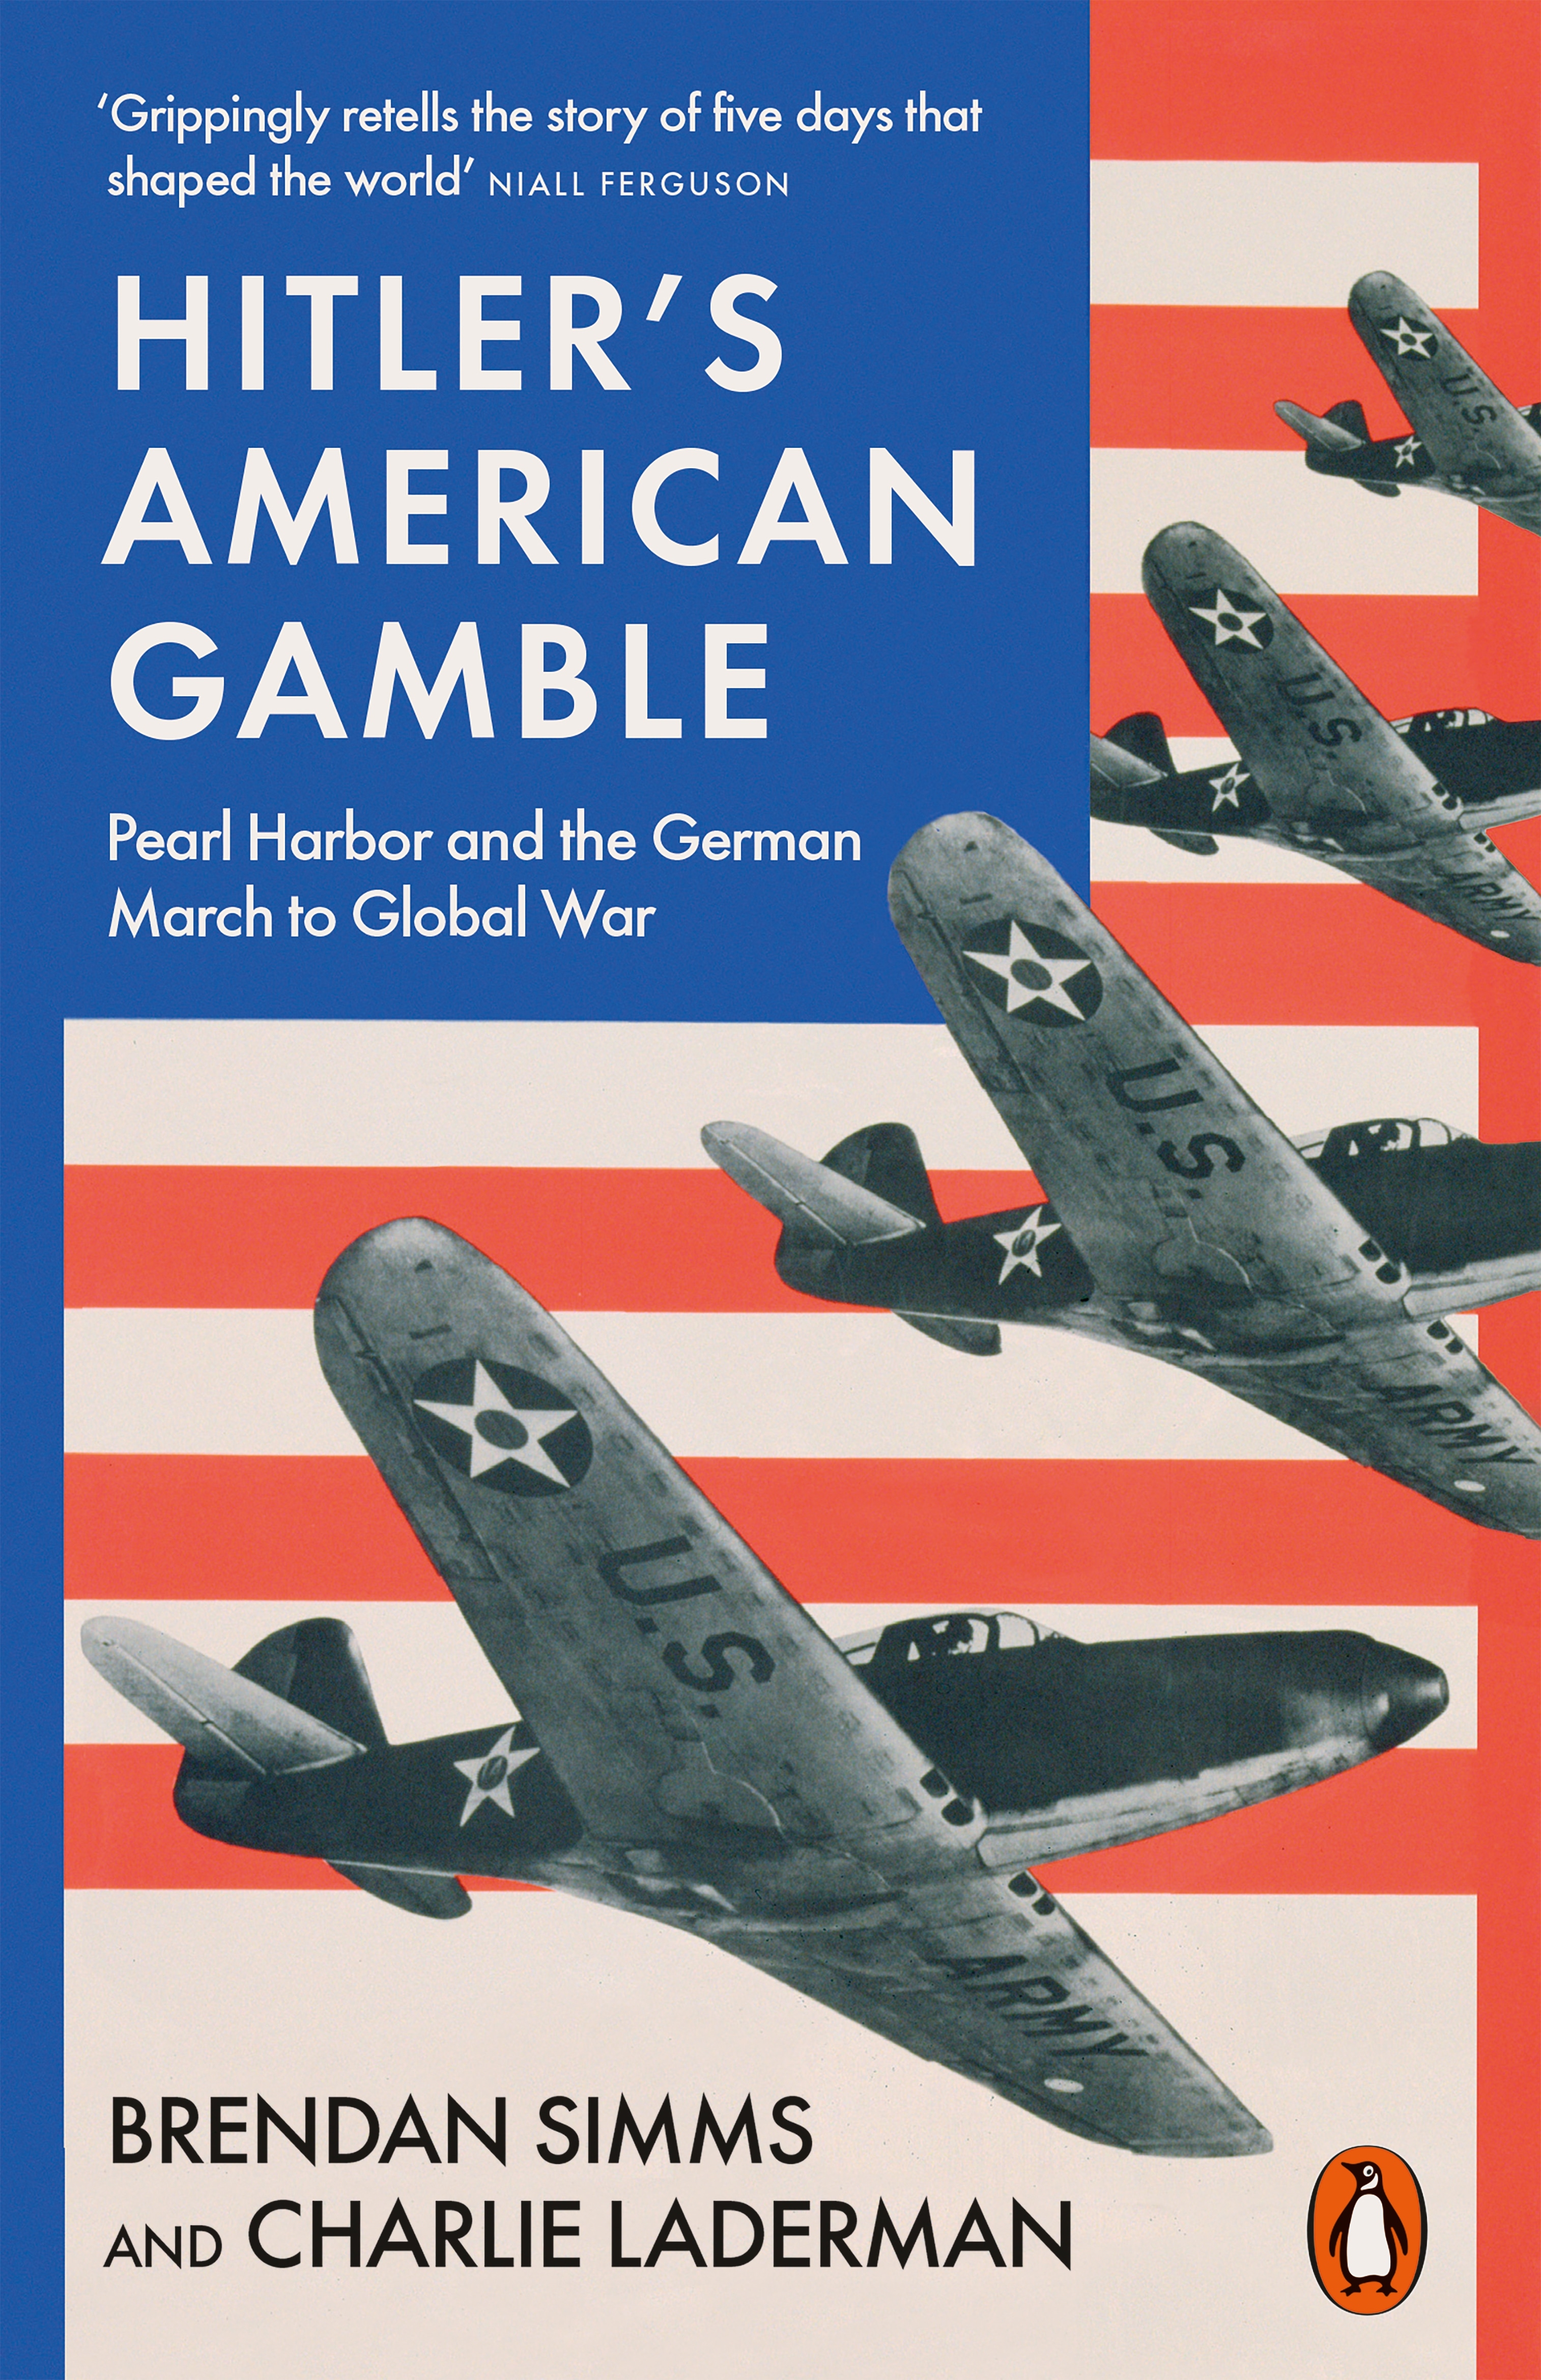 Book “Hitler's American Gamble” by Brendan Simms, Charlie Laderman — October 6, 2022